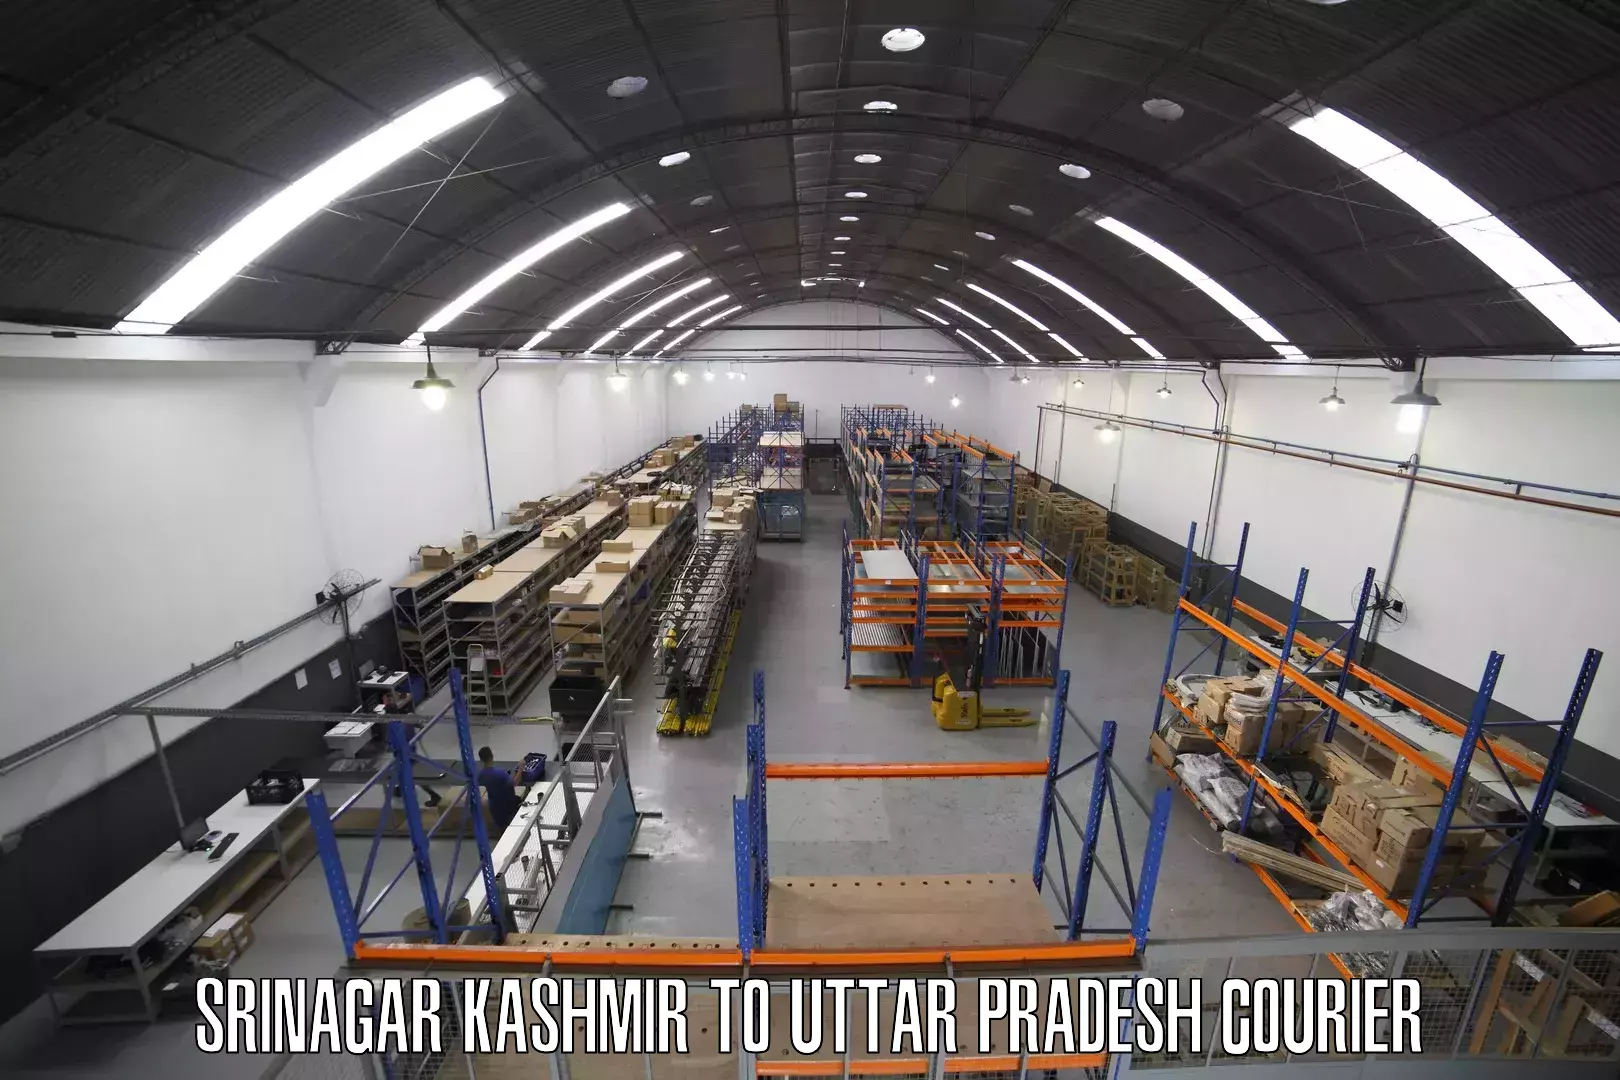 Package delivery network Srinagar Kashmir to Chandpur